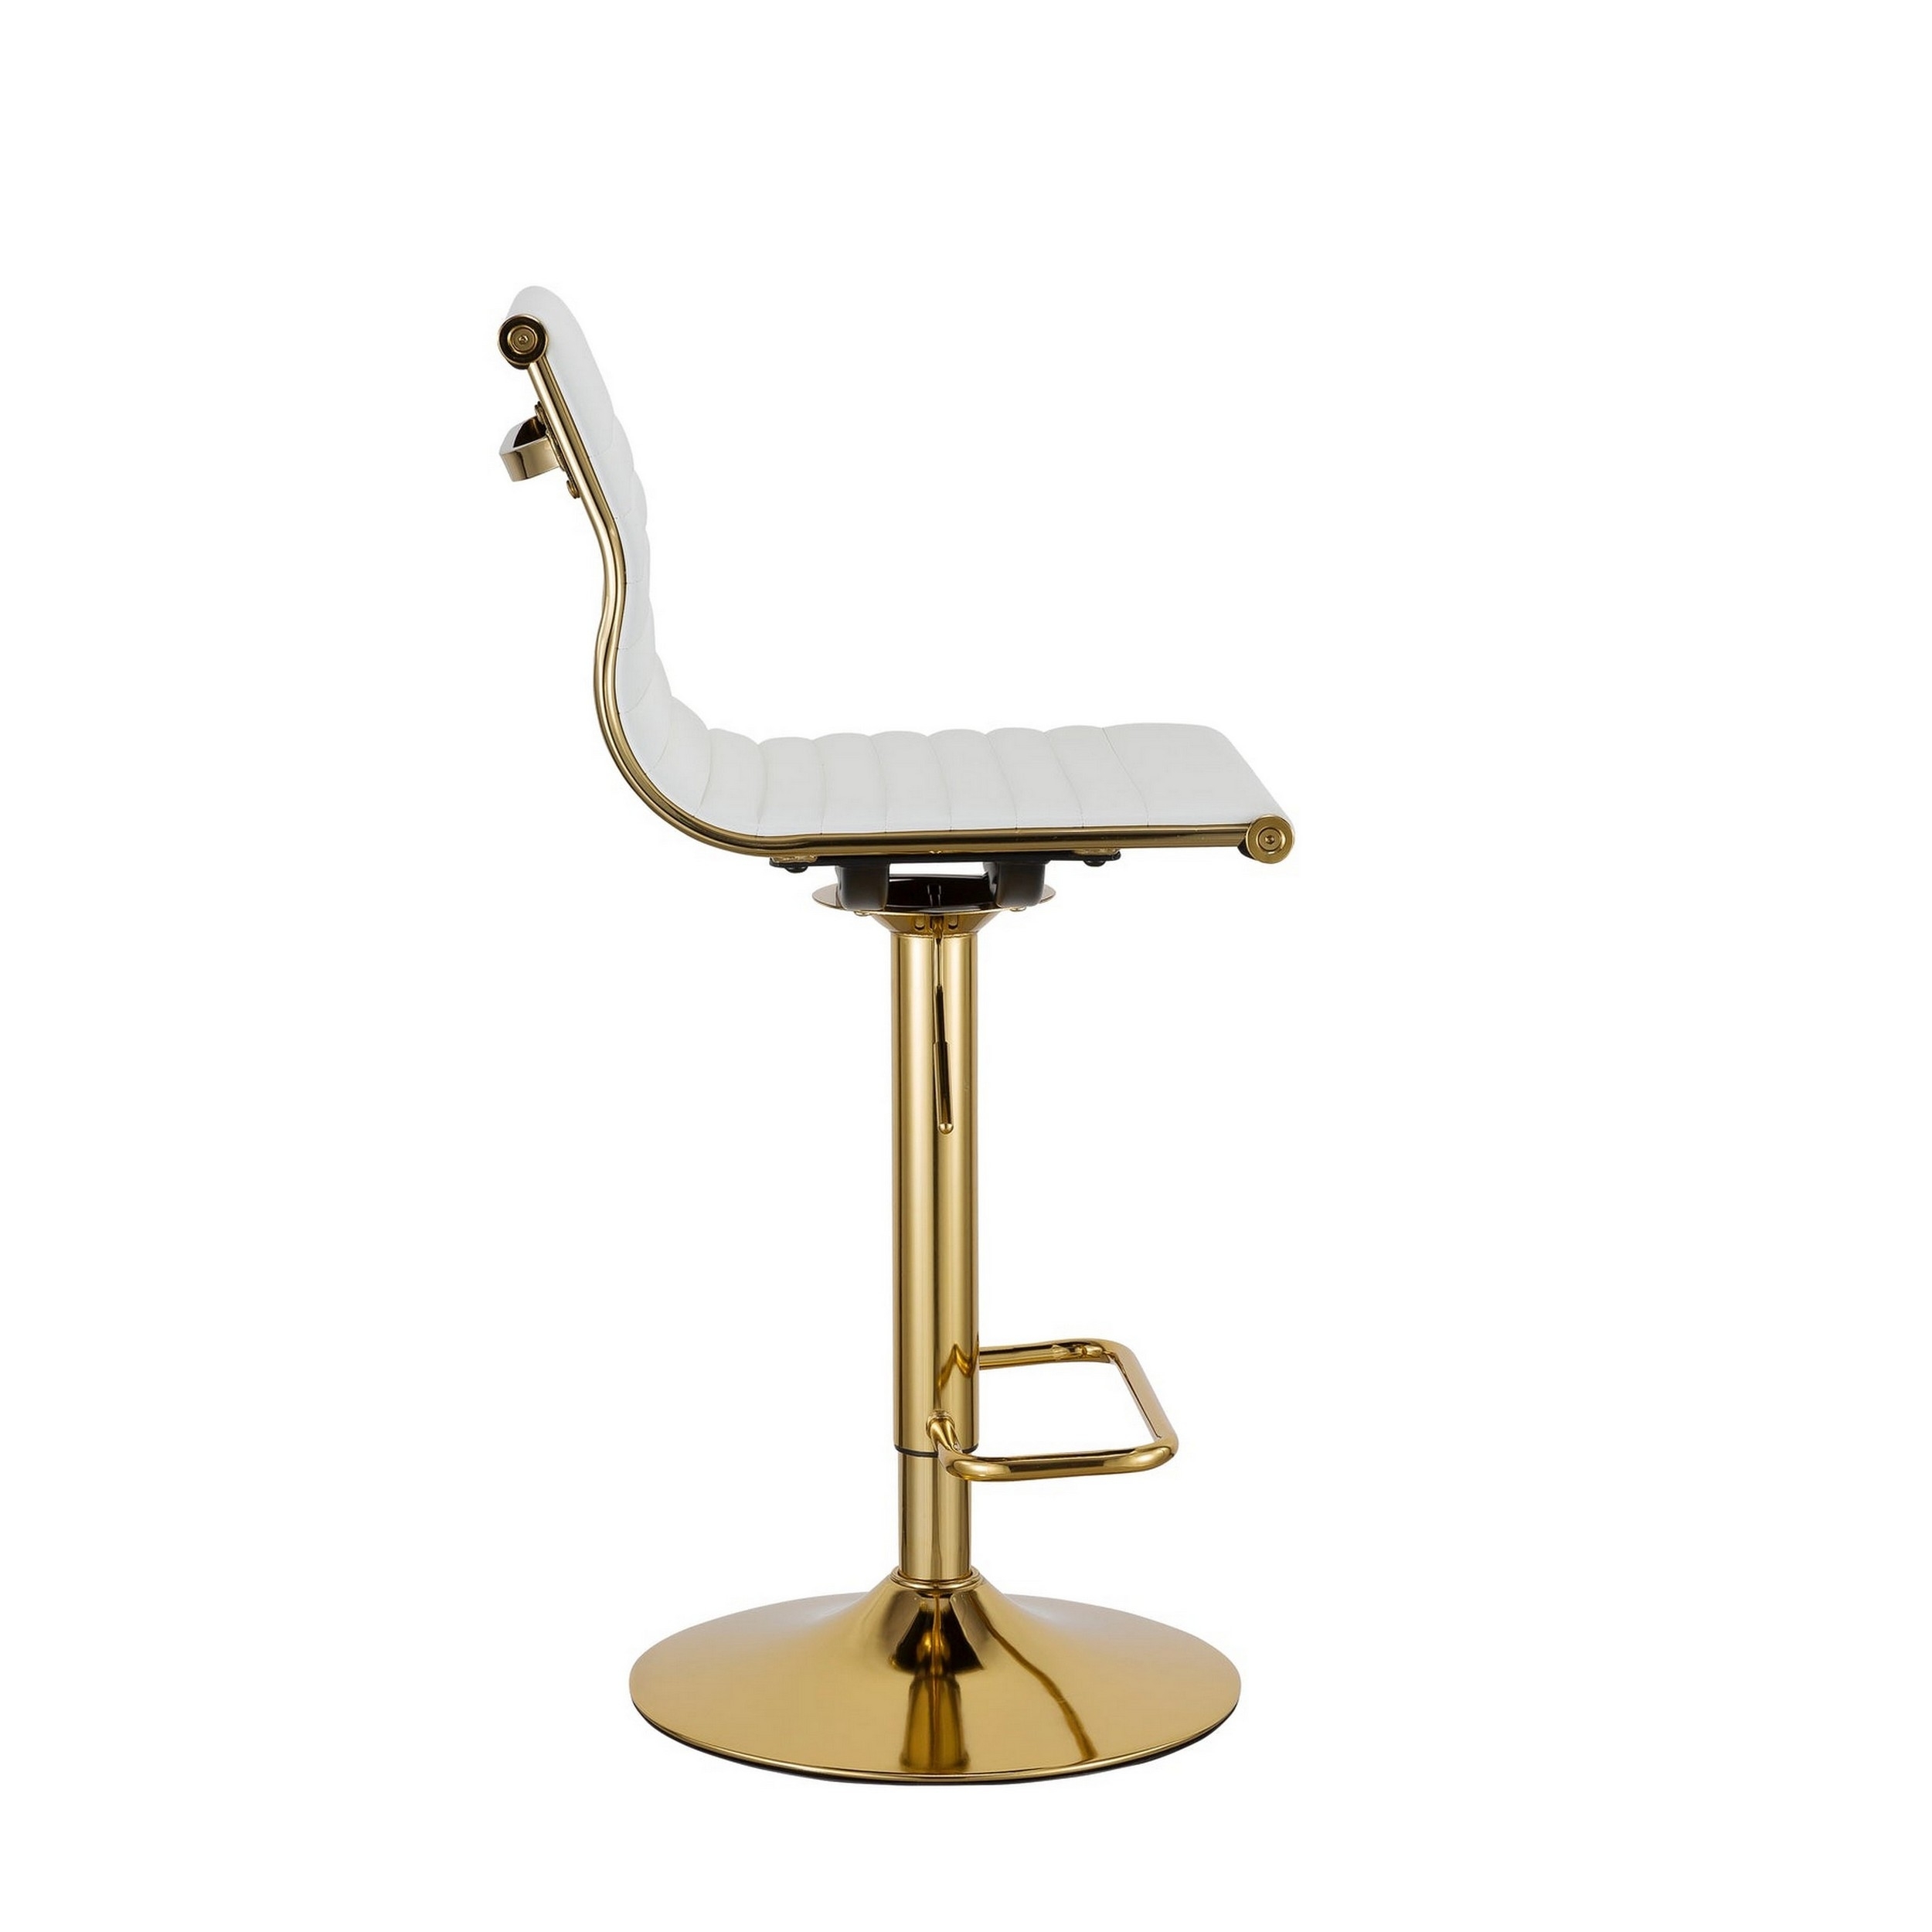 Beli 24-31 Inch Barstool Chair, Set Of 2, Adjustable Height, Gold, Black- Saltoro Sherpi